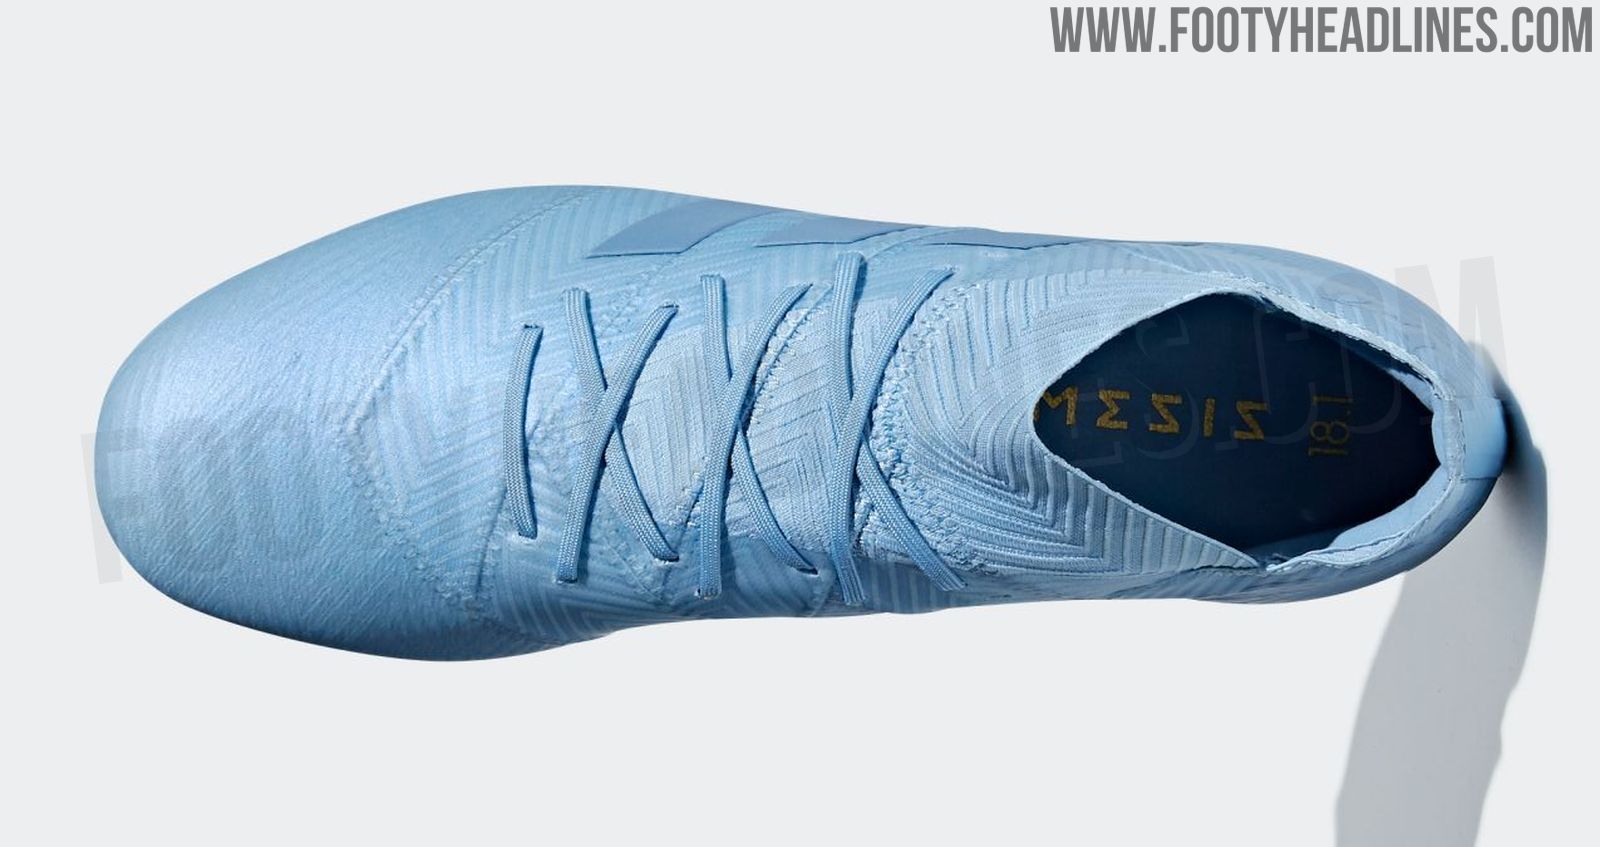 Adidas Nemeziz Messi Spectral Mode Boots Released - Footy Headlines